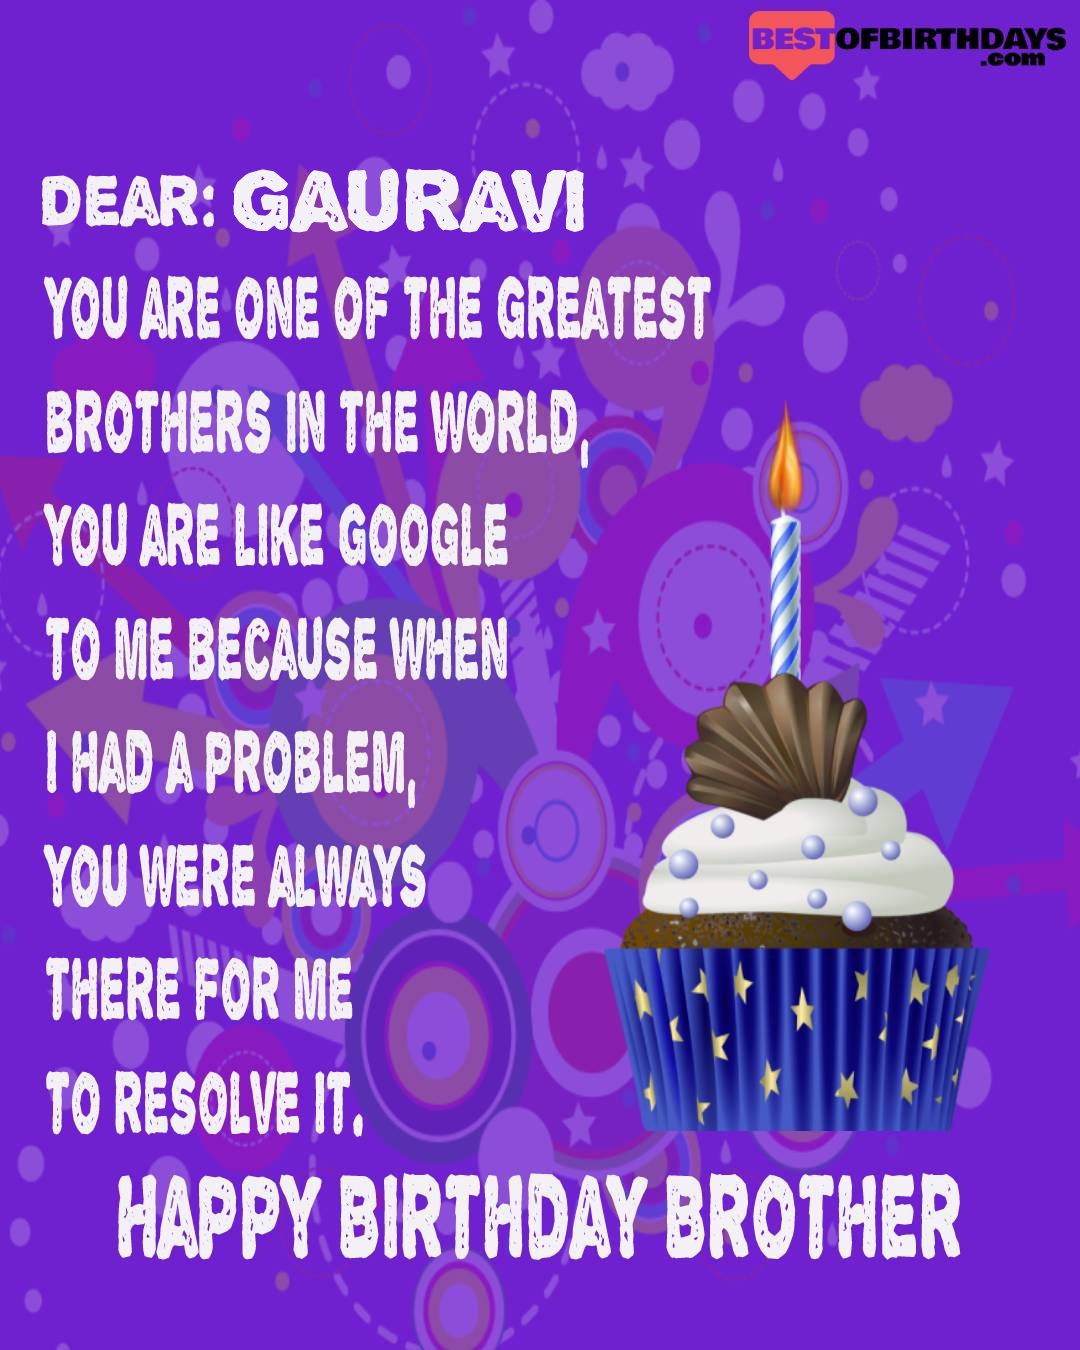 Happy birthday gauravi bhai brother bro